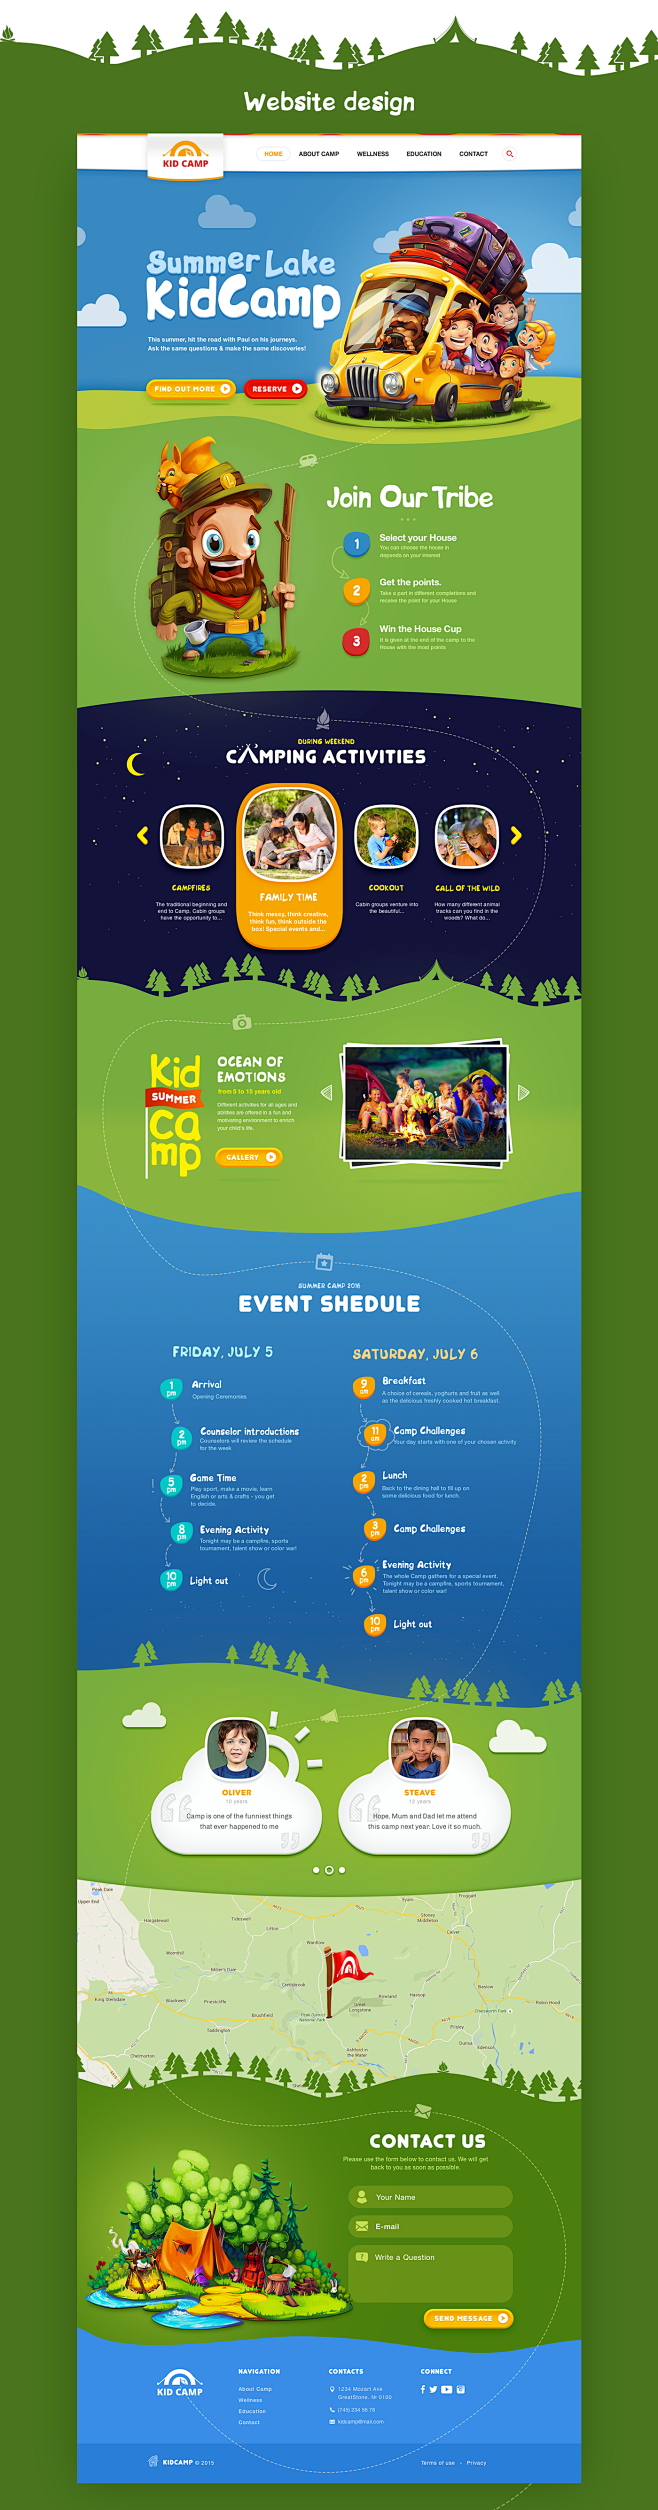 KidCamp website desi...